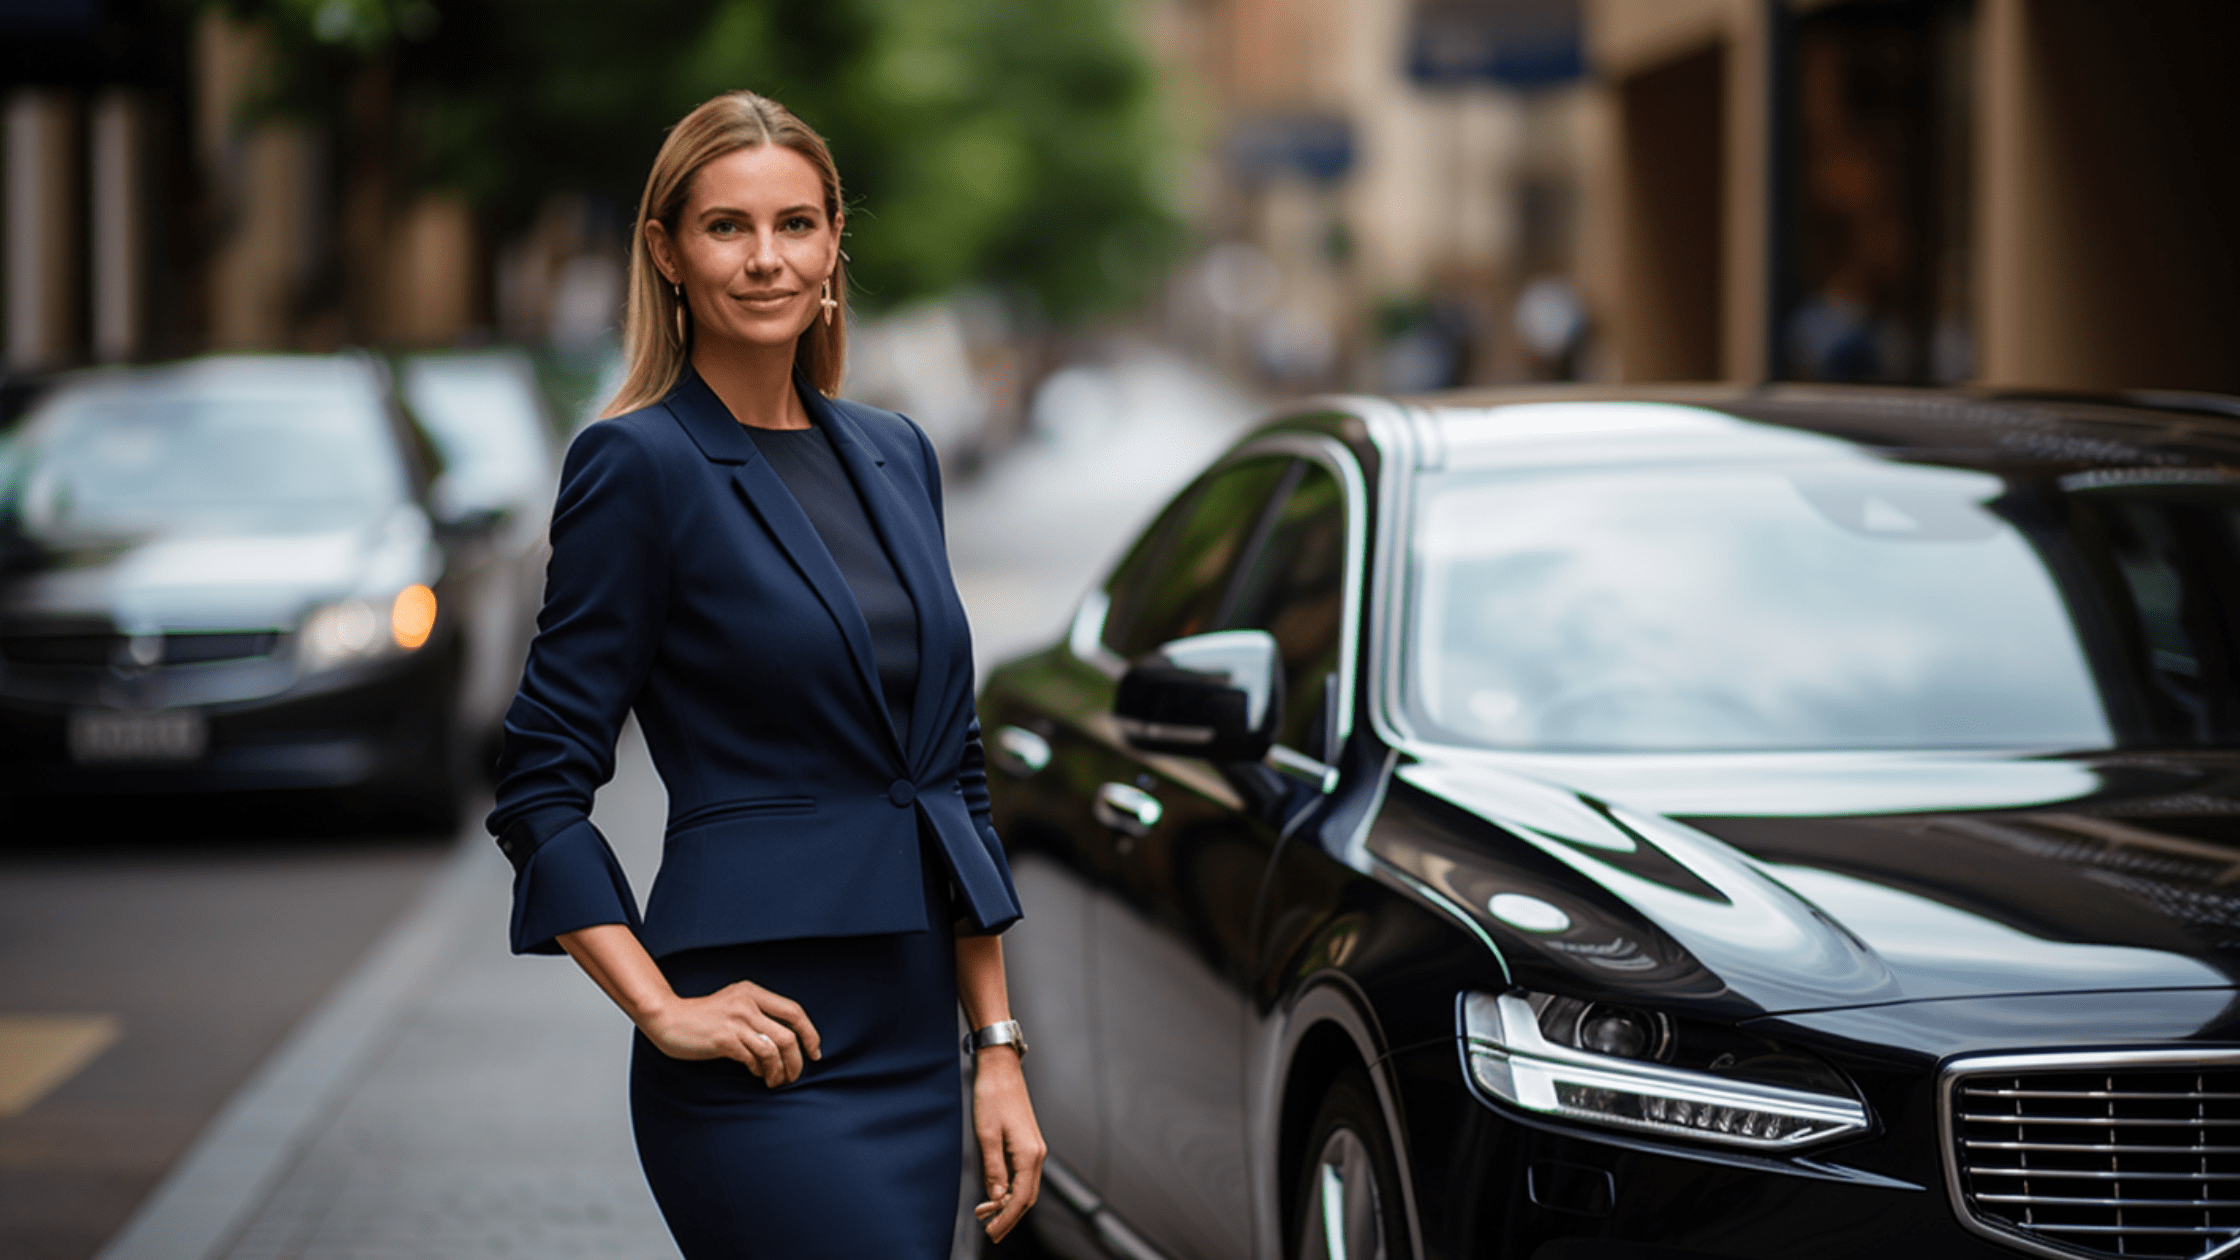 Female Uber Driver on the Sydney Street